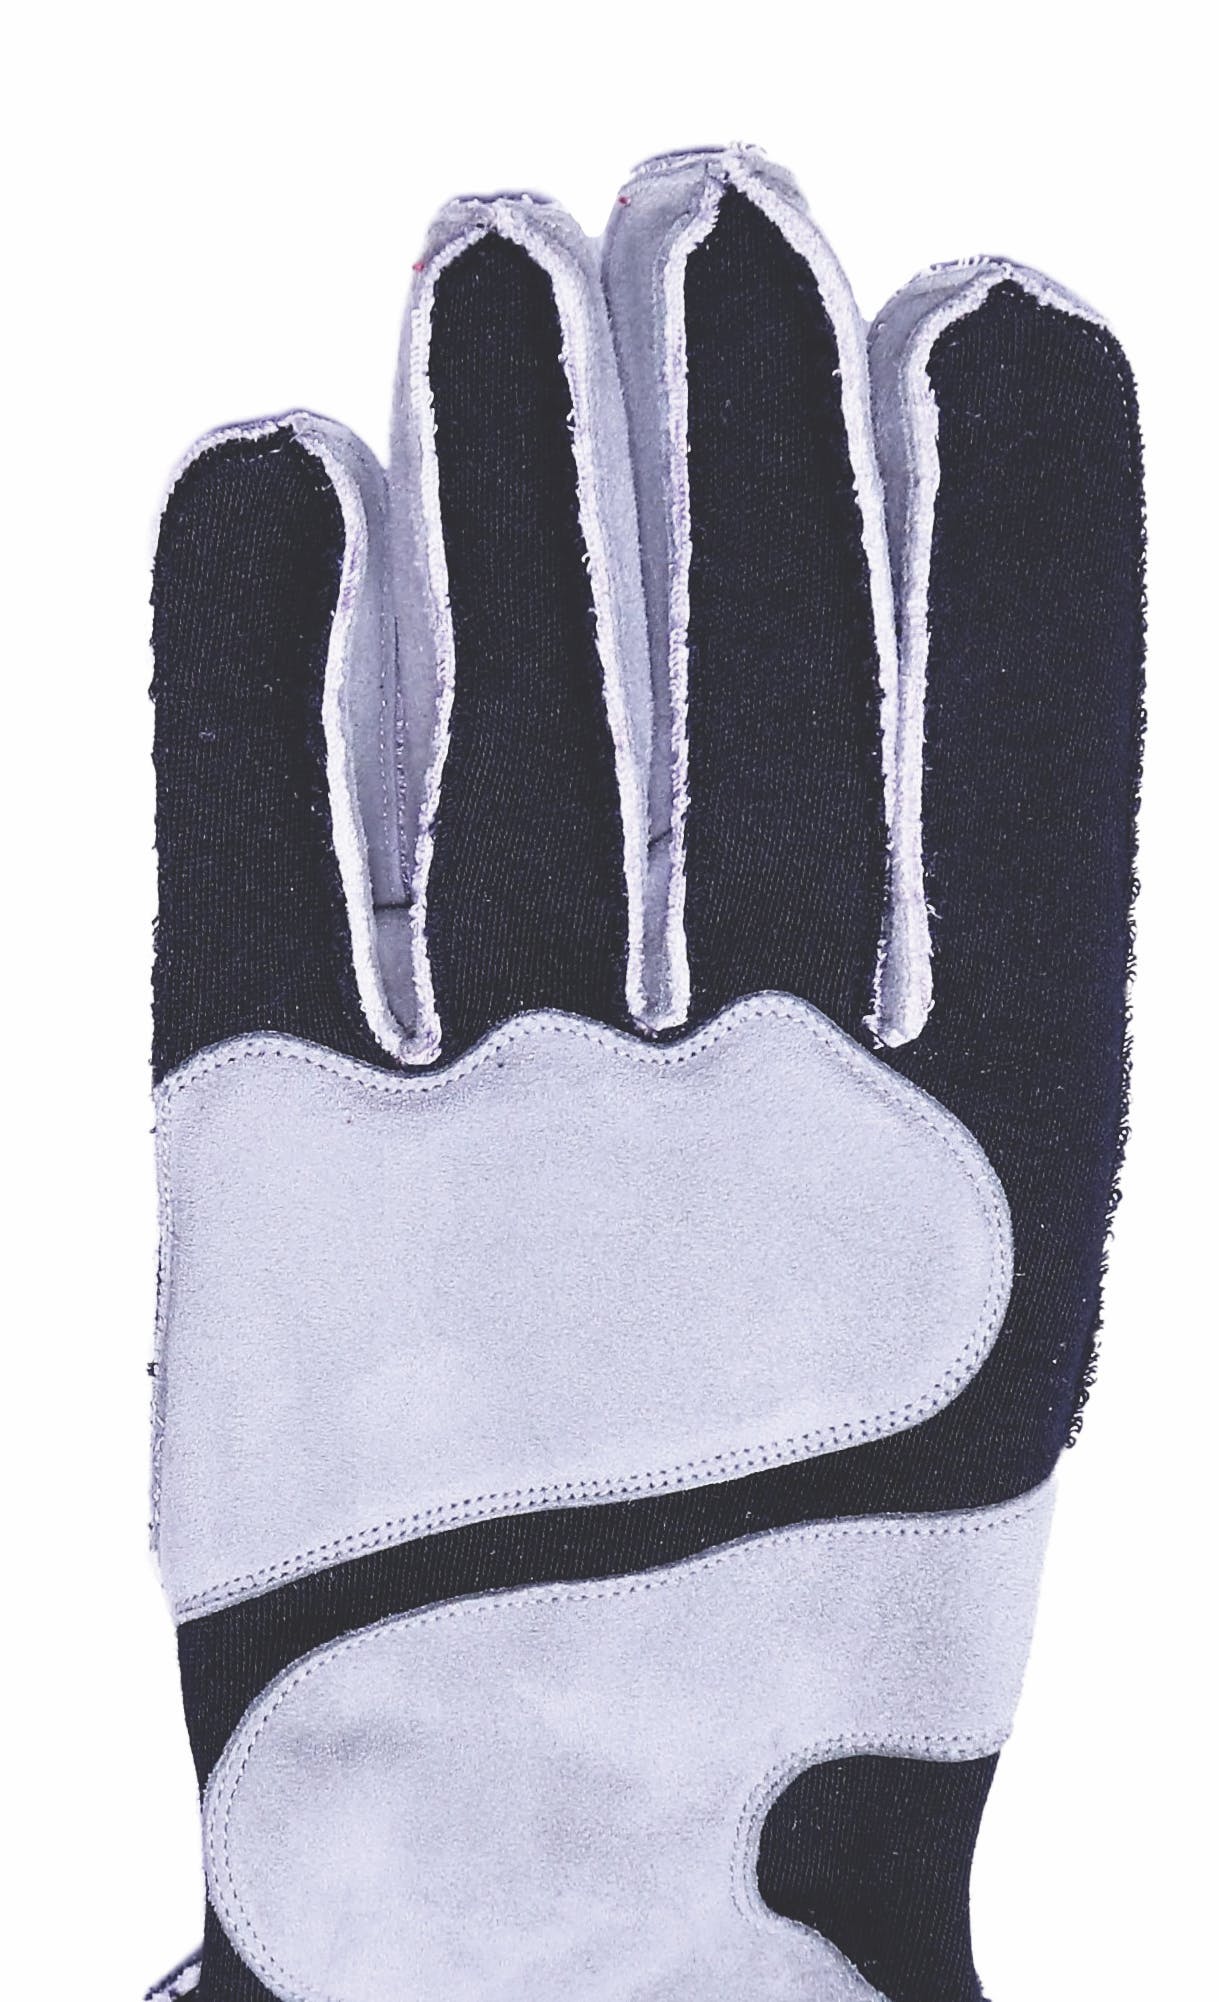 RaceQuip 356607 SFI-5 Angle-Cut Cuffed Racing Gloves (Gray/Black, XX-Large)